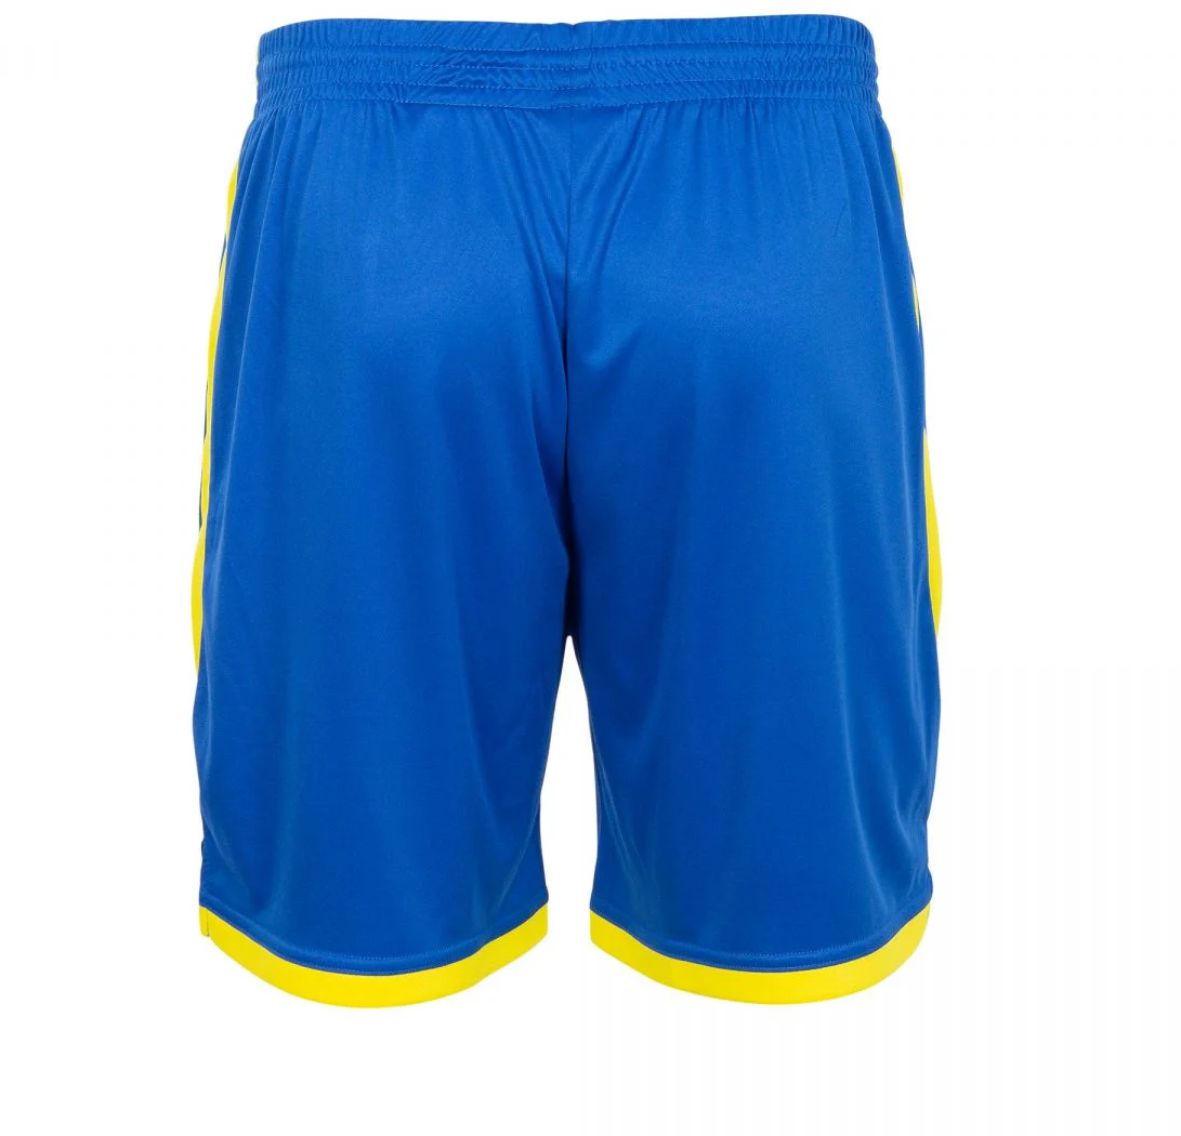 Stanno - Focus Shorts - Royal & Yellow